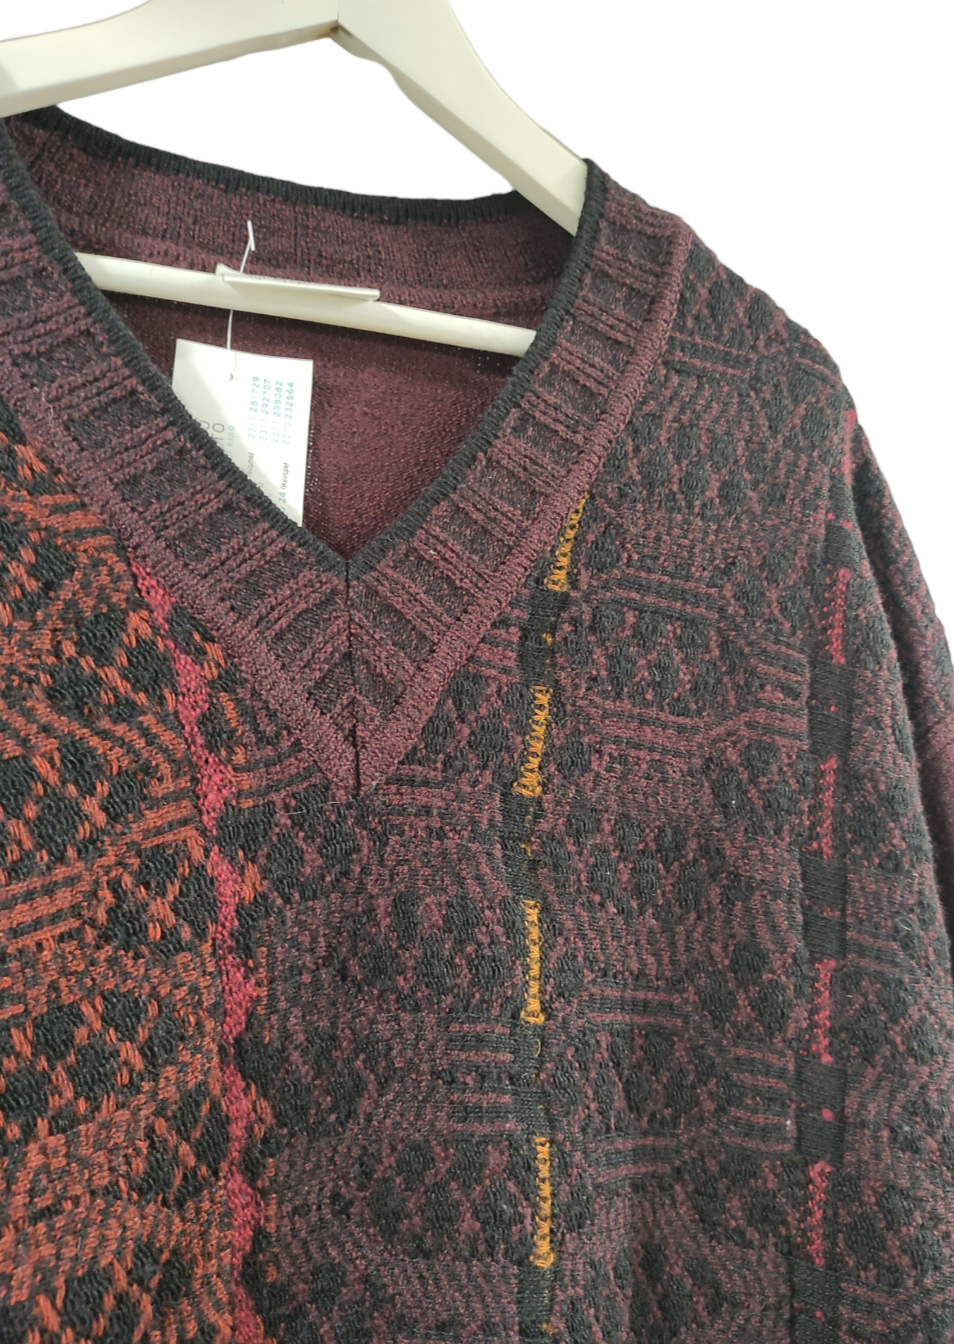 Vintage, Ανδρική πλεκτή Μπλούζα - Πουλόβερ RENATO CAVALLI σε Μπορντό Χρώμα (Large)